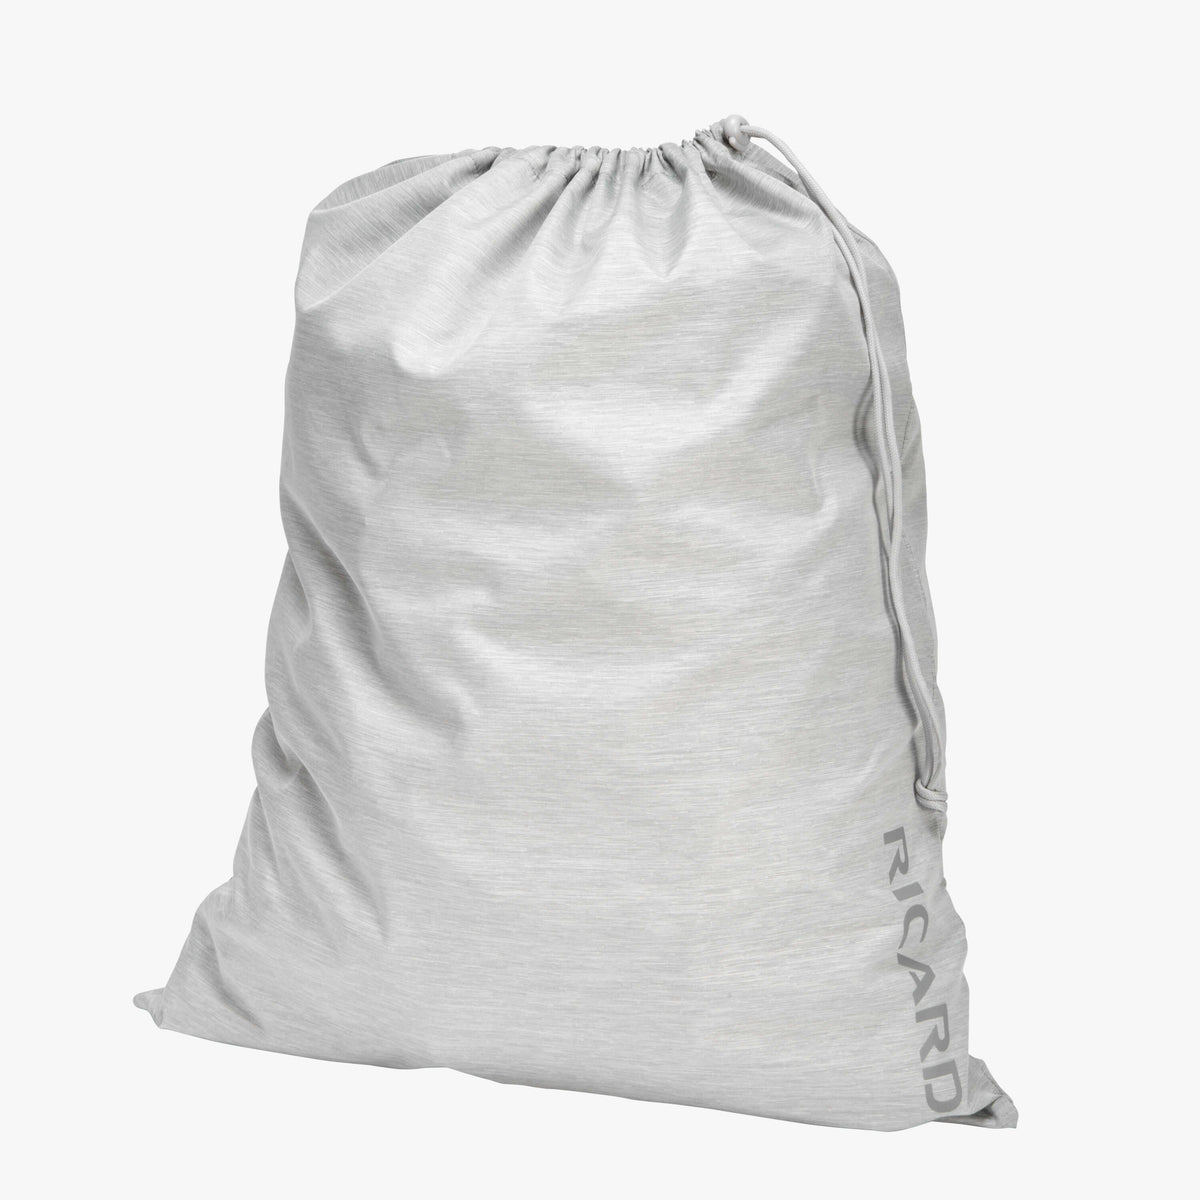 Ricardo Beverly Hills Essentials 2.0 Laundry Bag Cloud